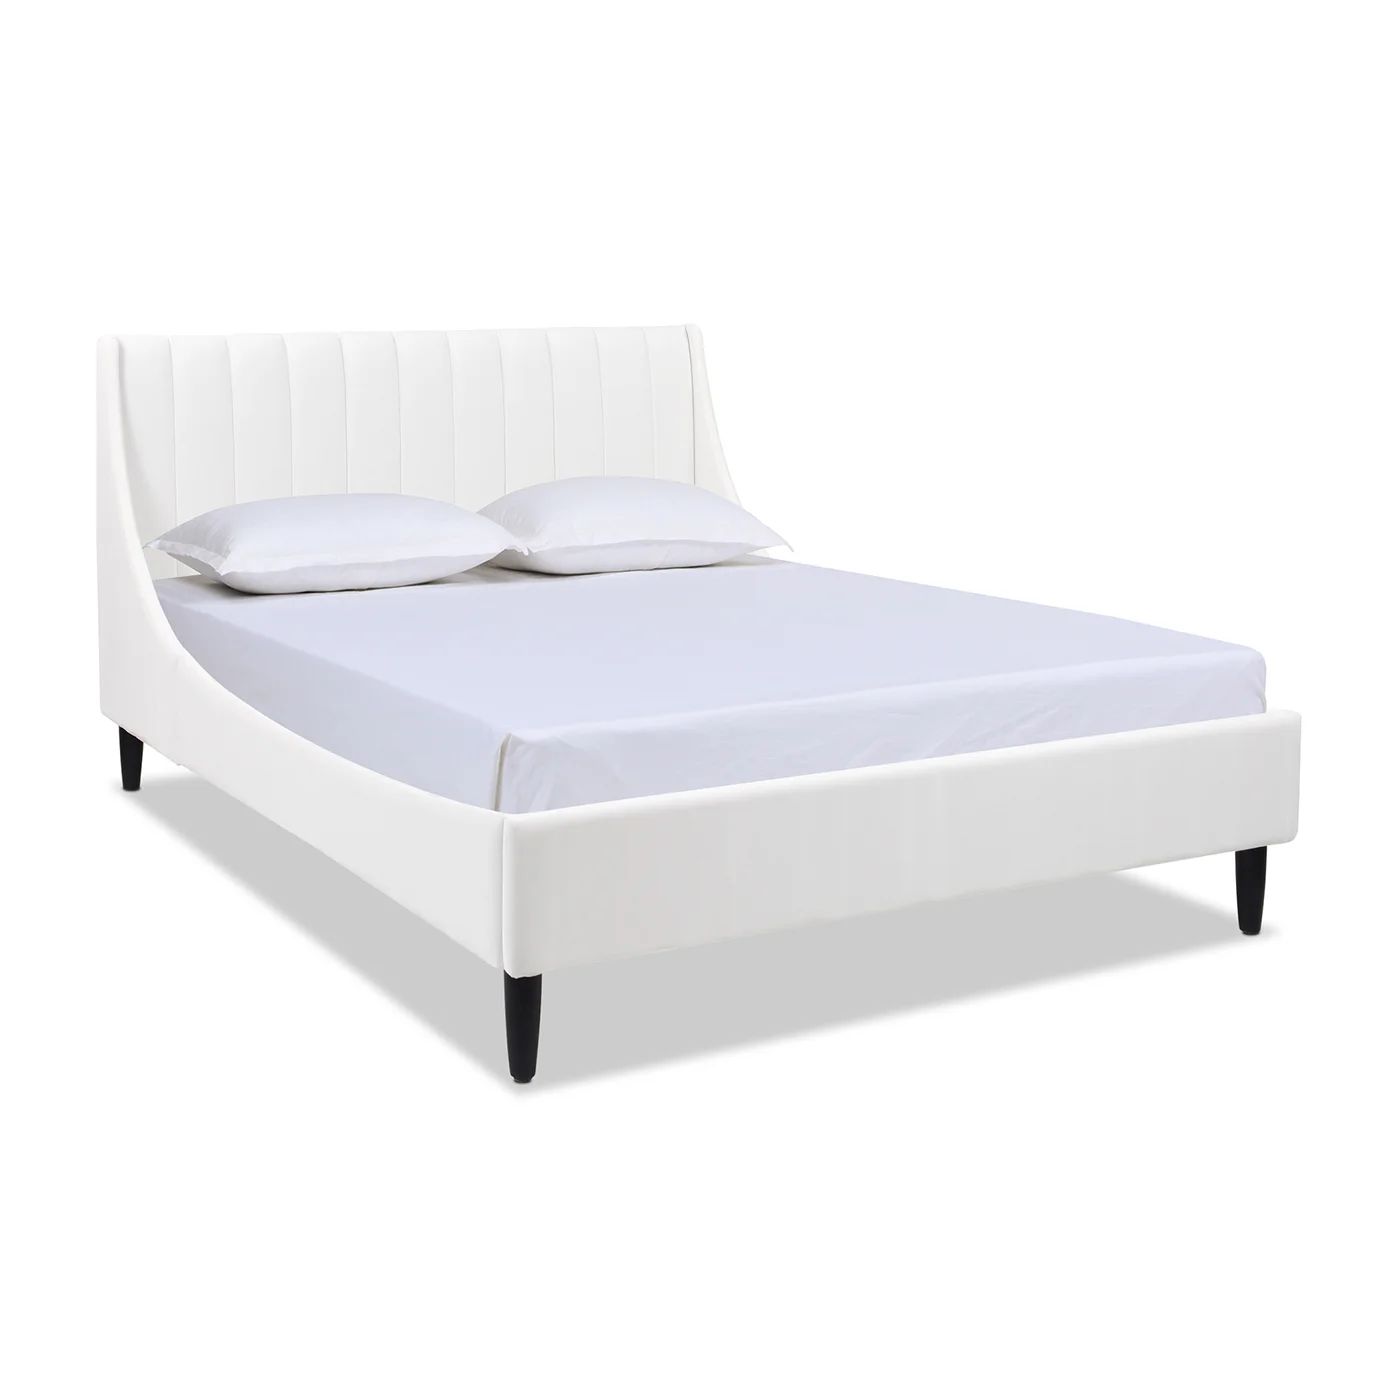 Ciceklic Tufted Upholstered Low Profile Platform Bed | Wayfair Professional